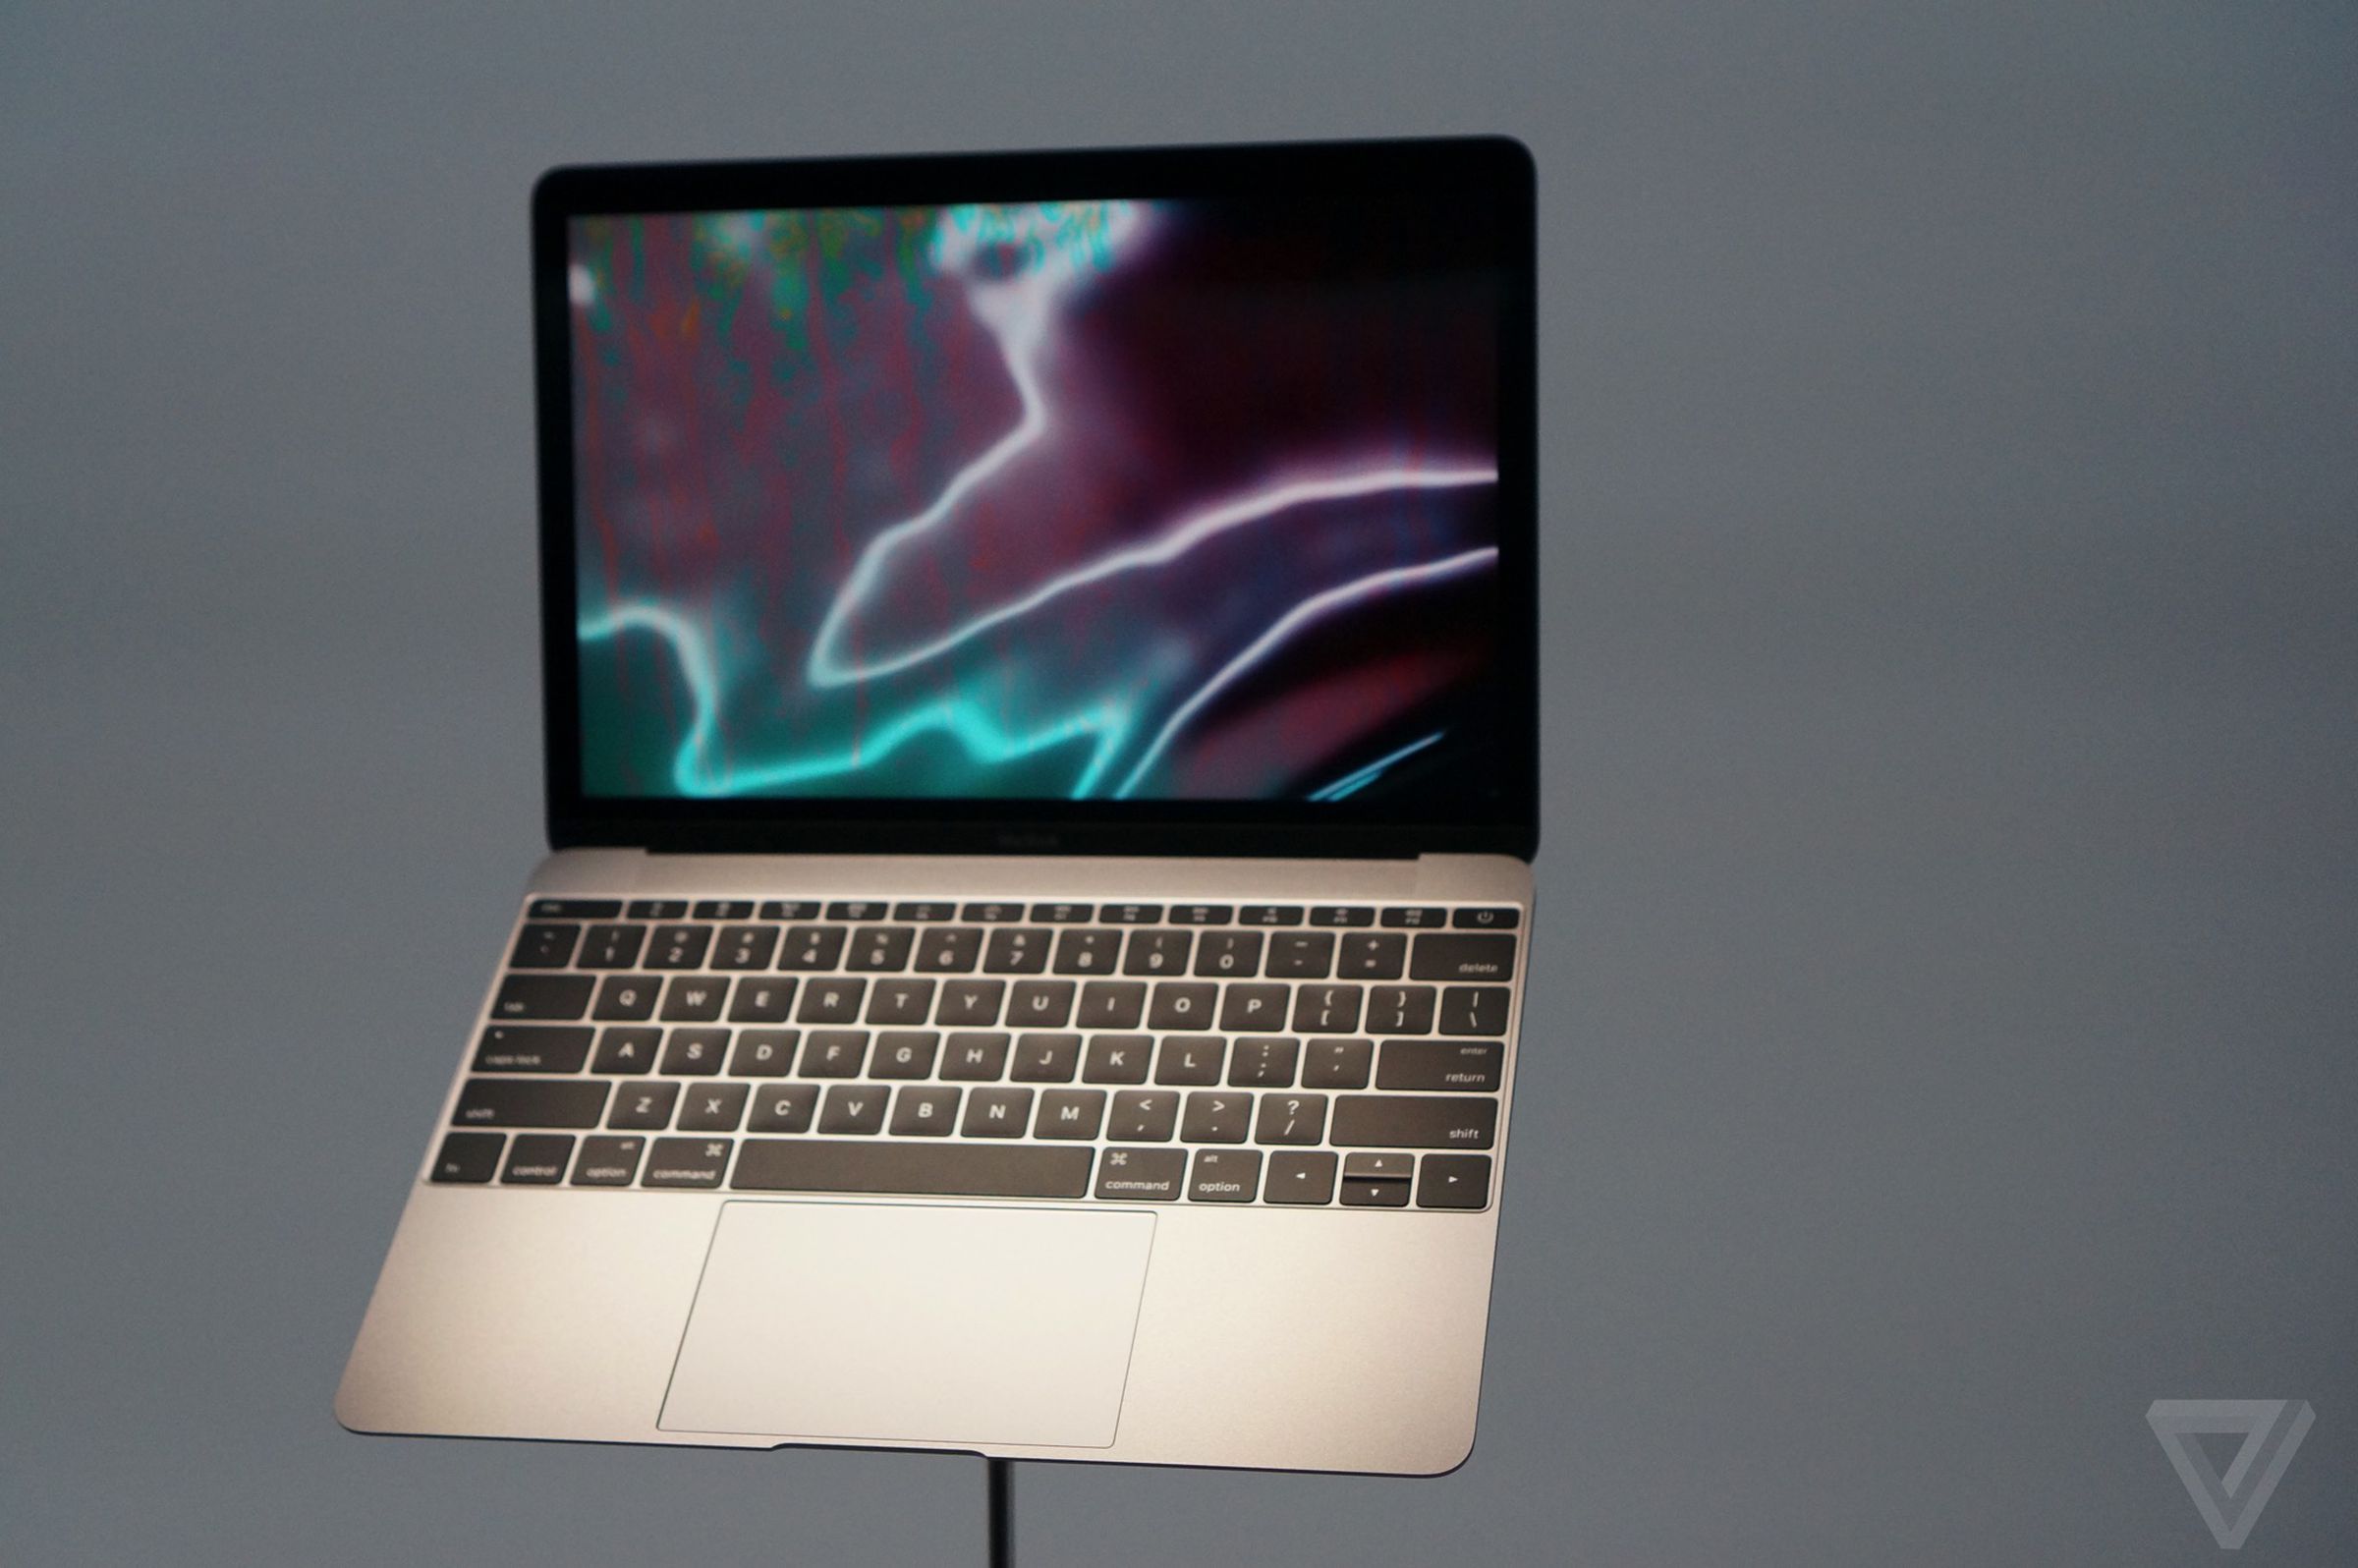 The new Macbook with Retina Display hands-on photos